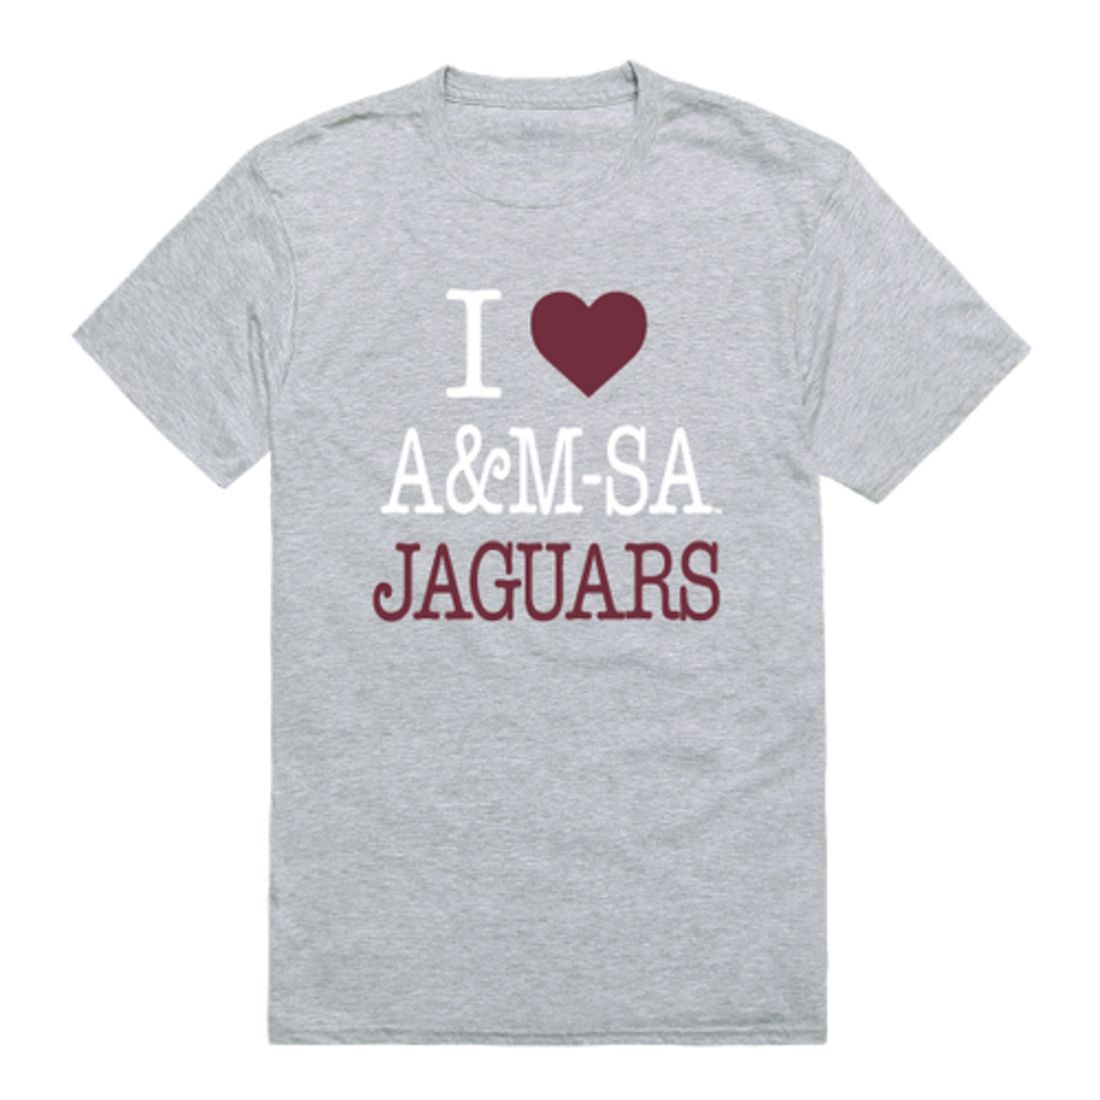 I Love Texas A&M University-San Antonio Jaguars T-Shirt Tee